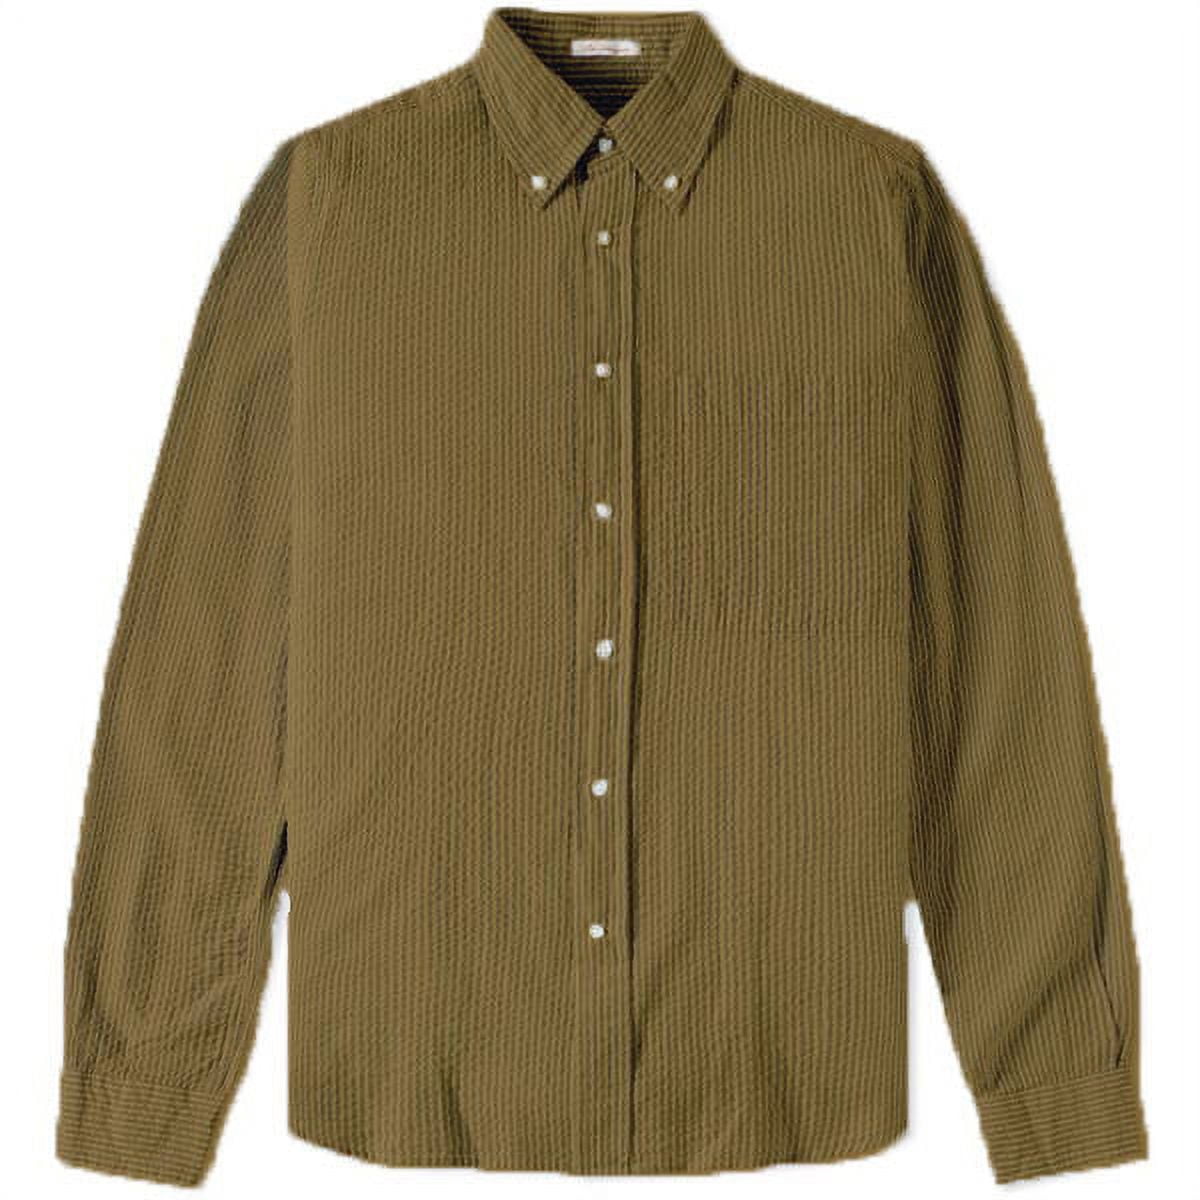 Gant Rugger Men's The Seersucker Shirt (341140), Medium, Wood Brown